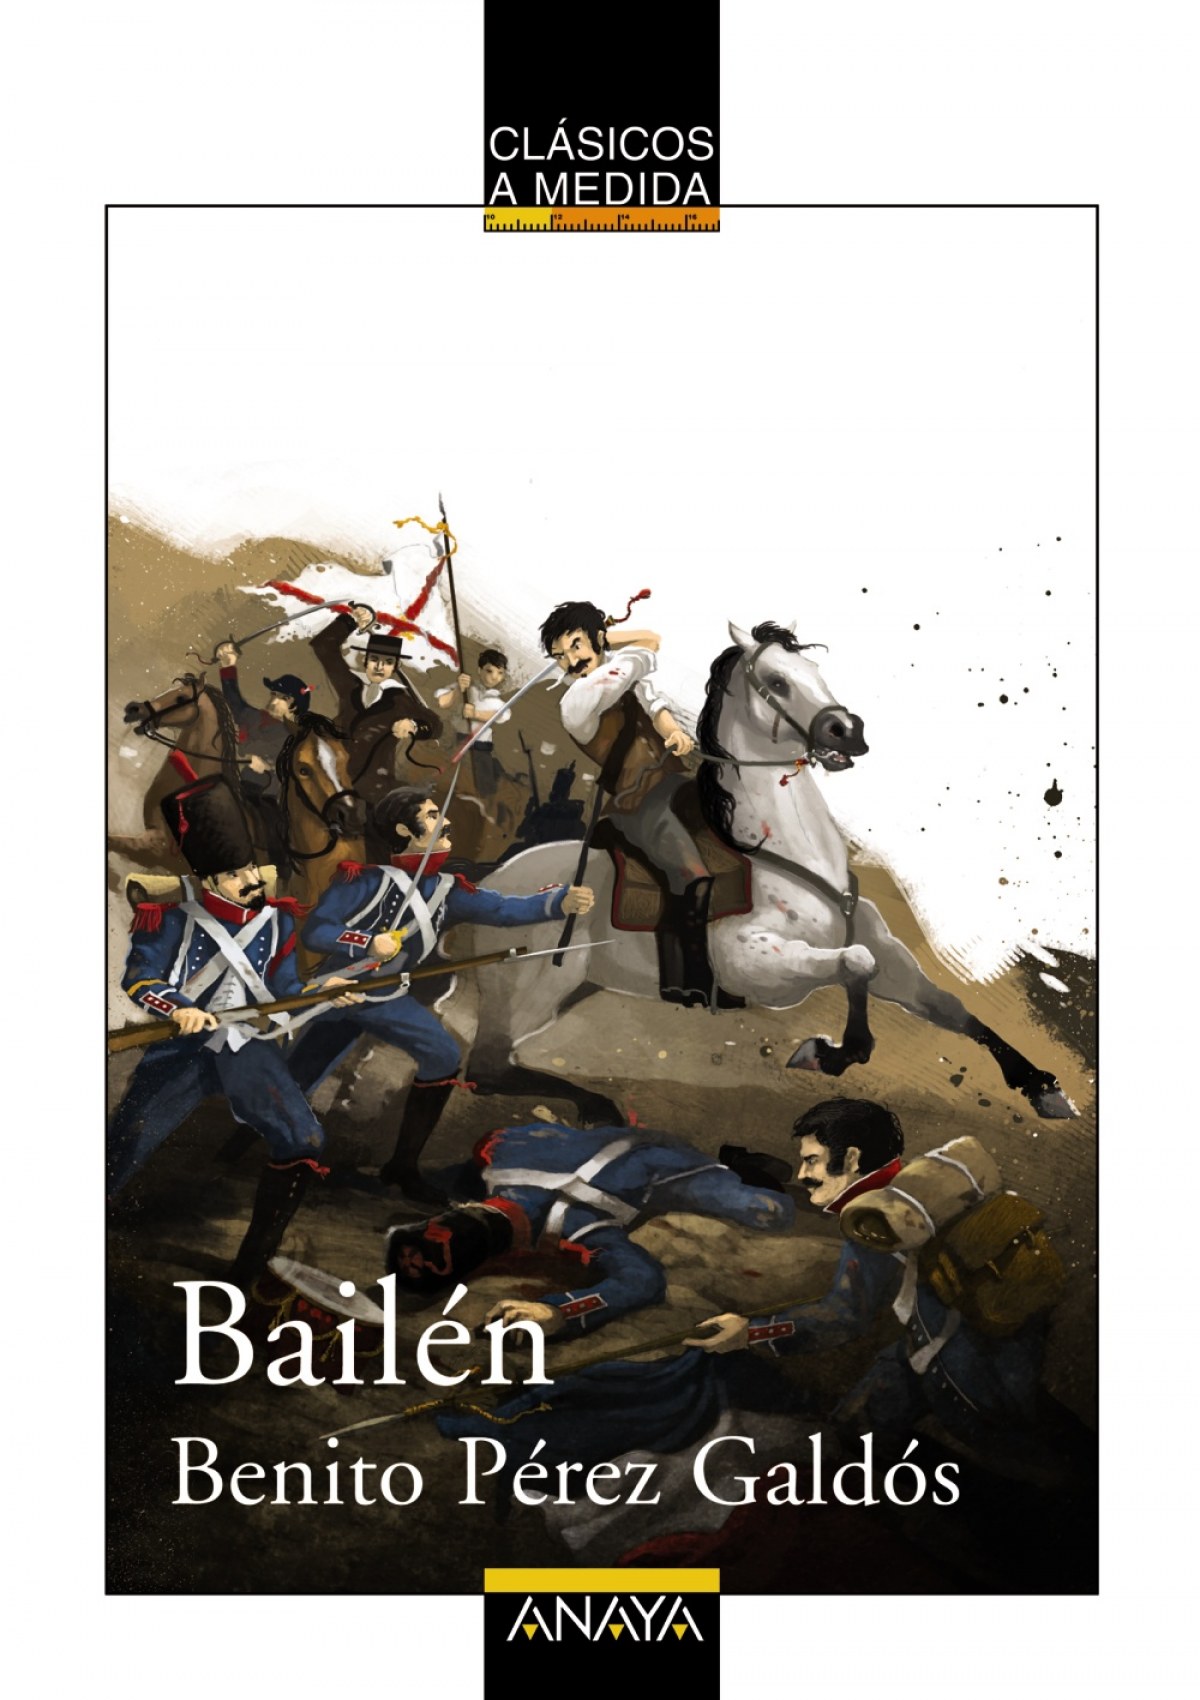 Bailén - Pérez Galdós, Benito